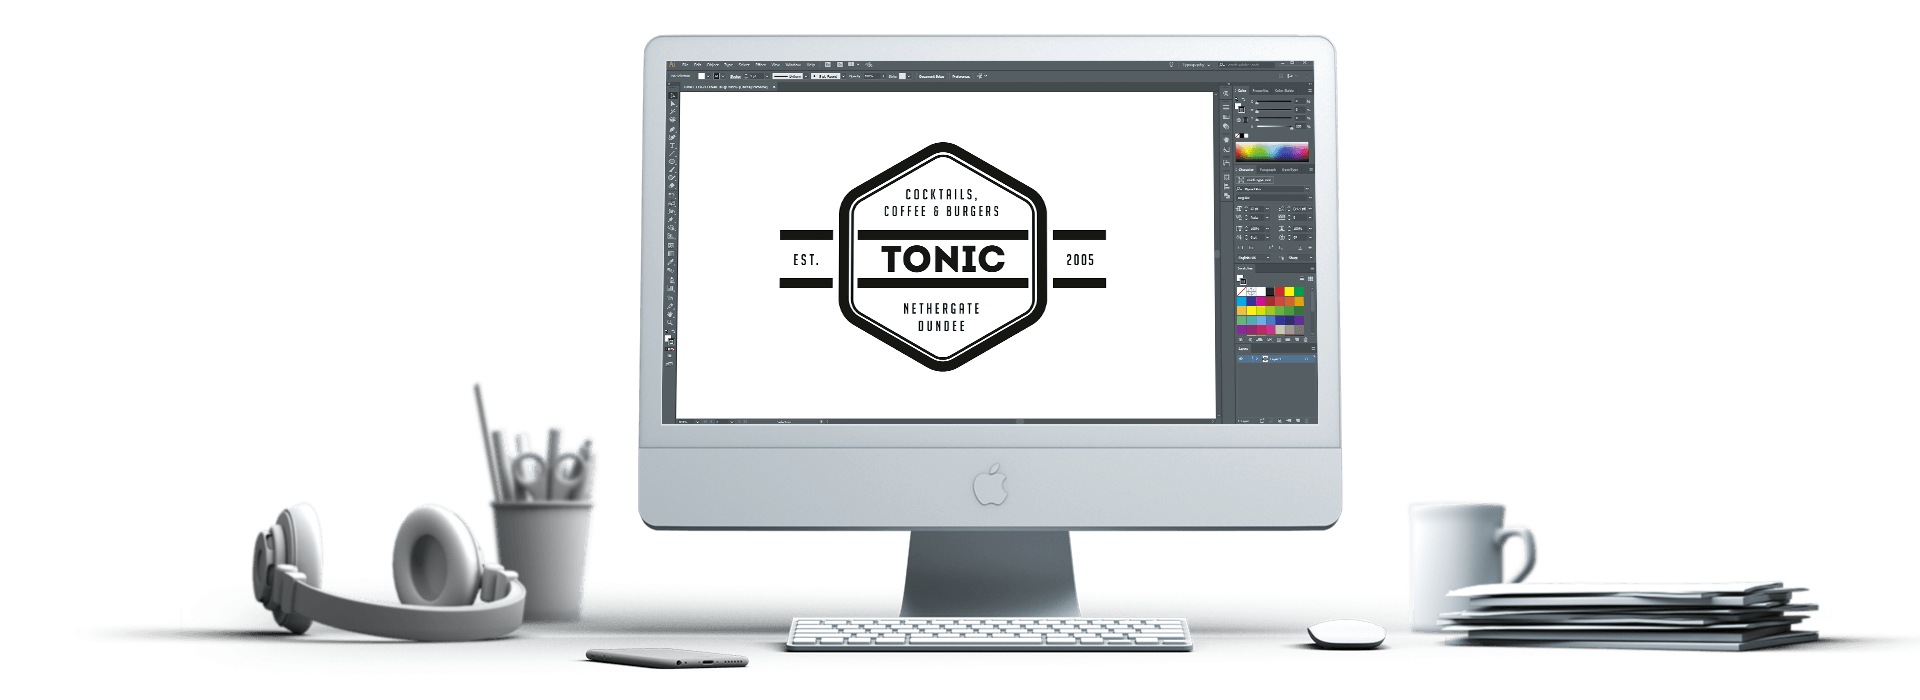 Tonic Dundee logo on iMac screen